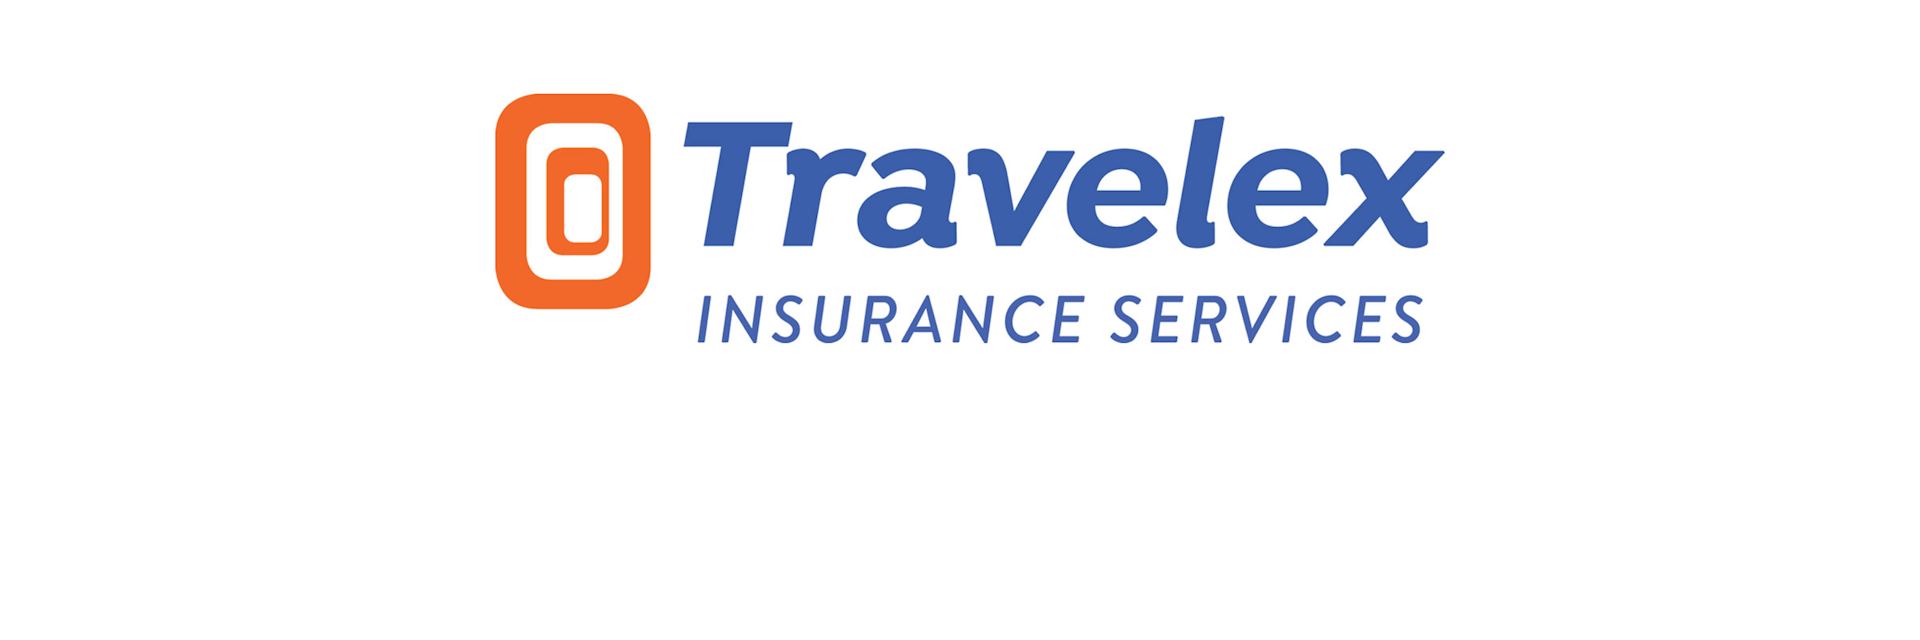 travel exchange insurance